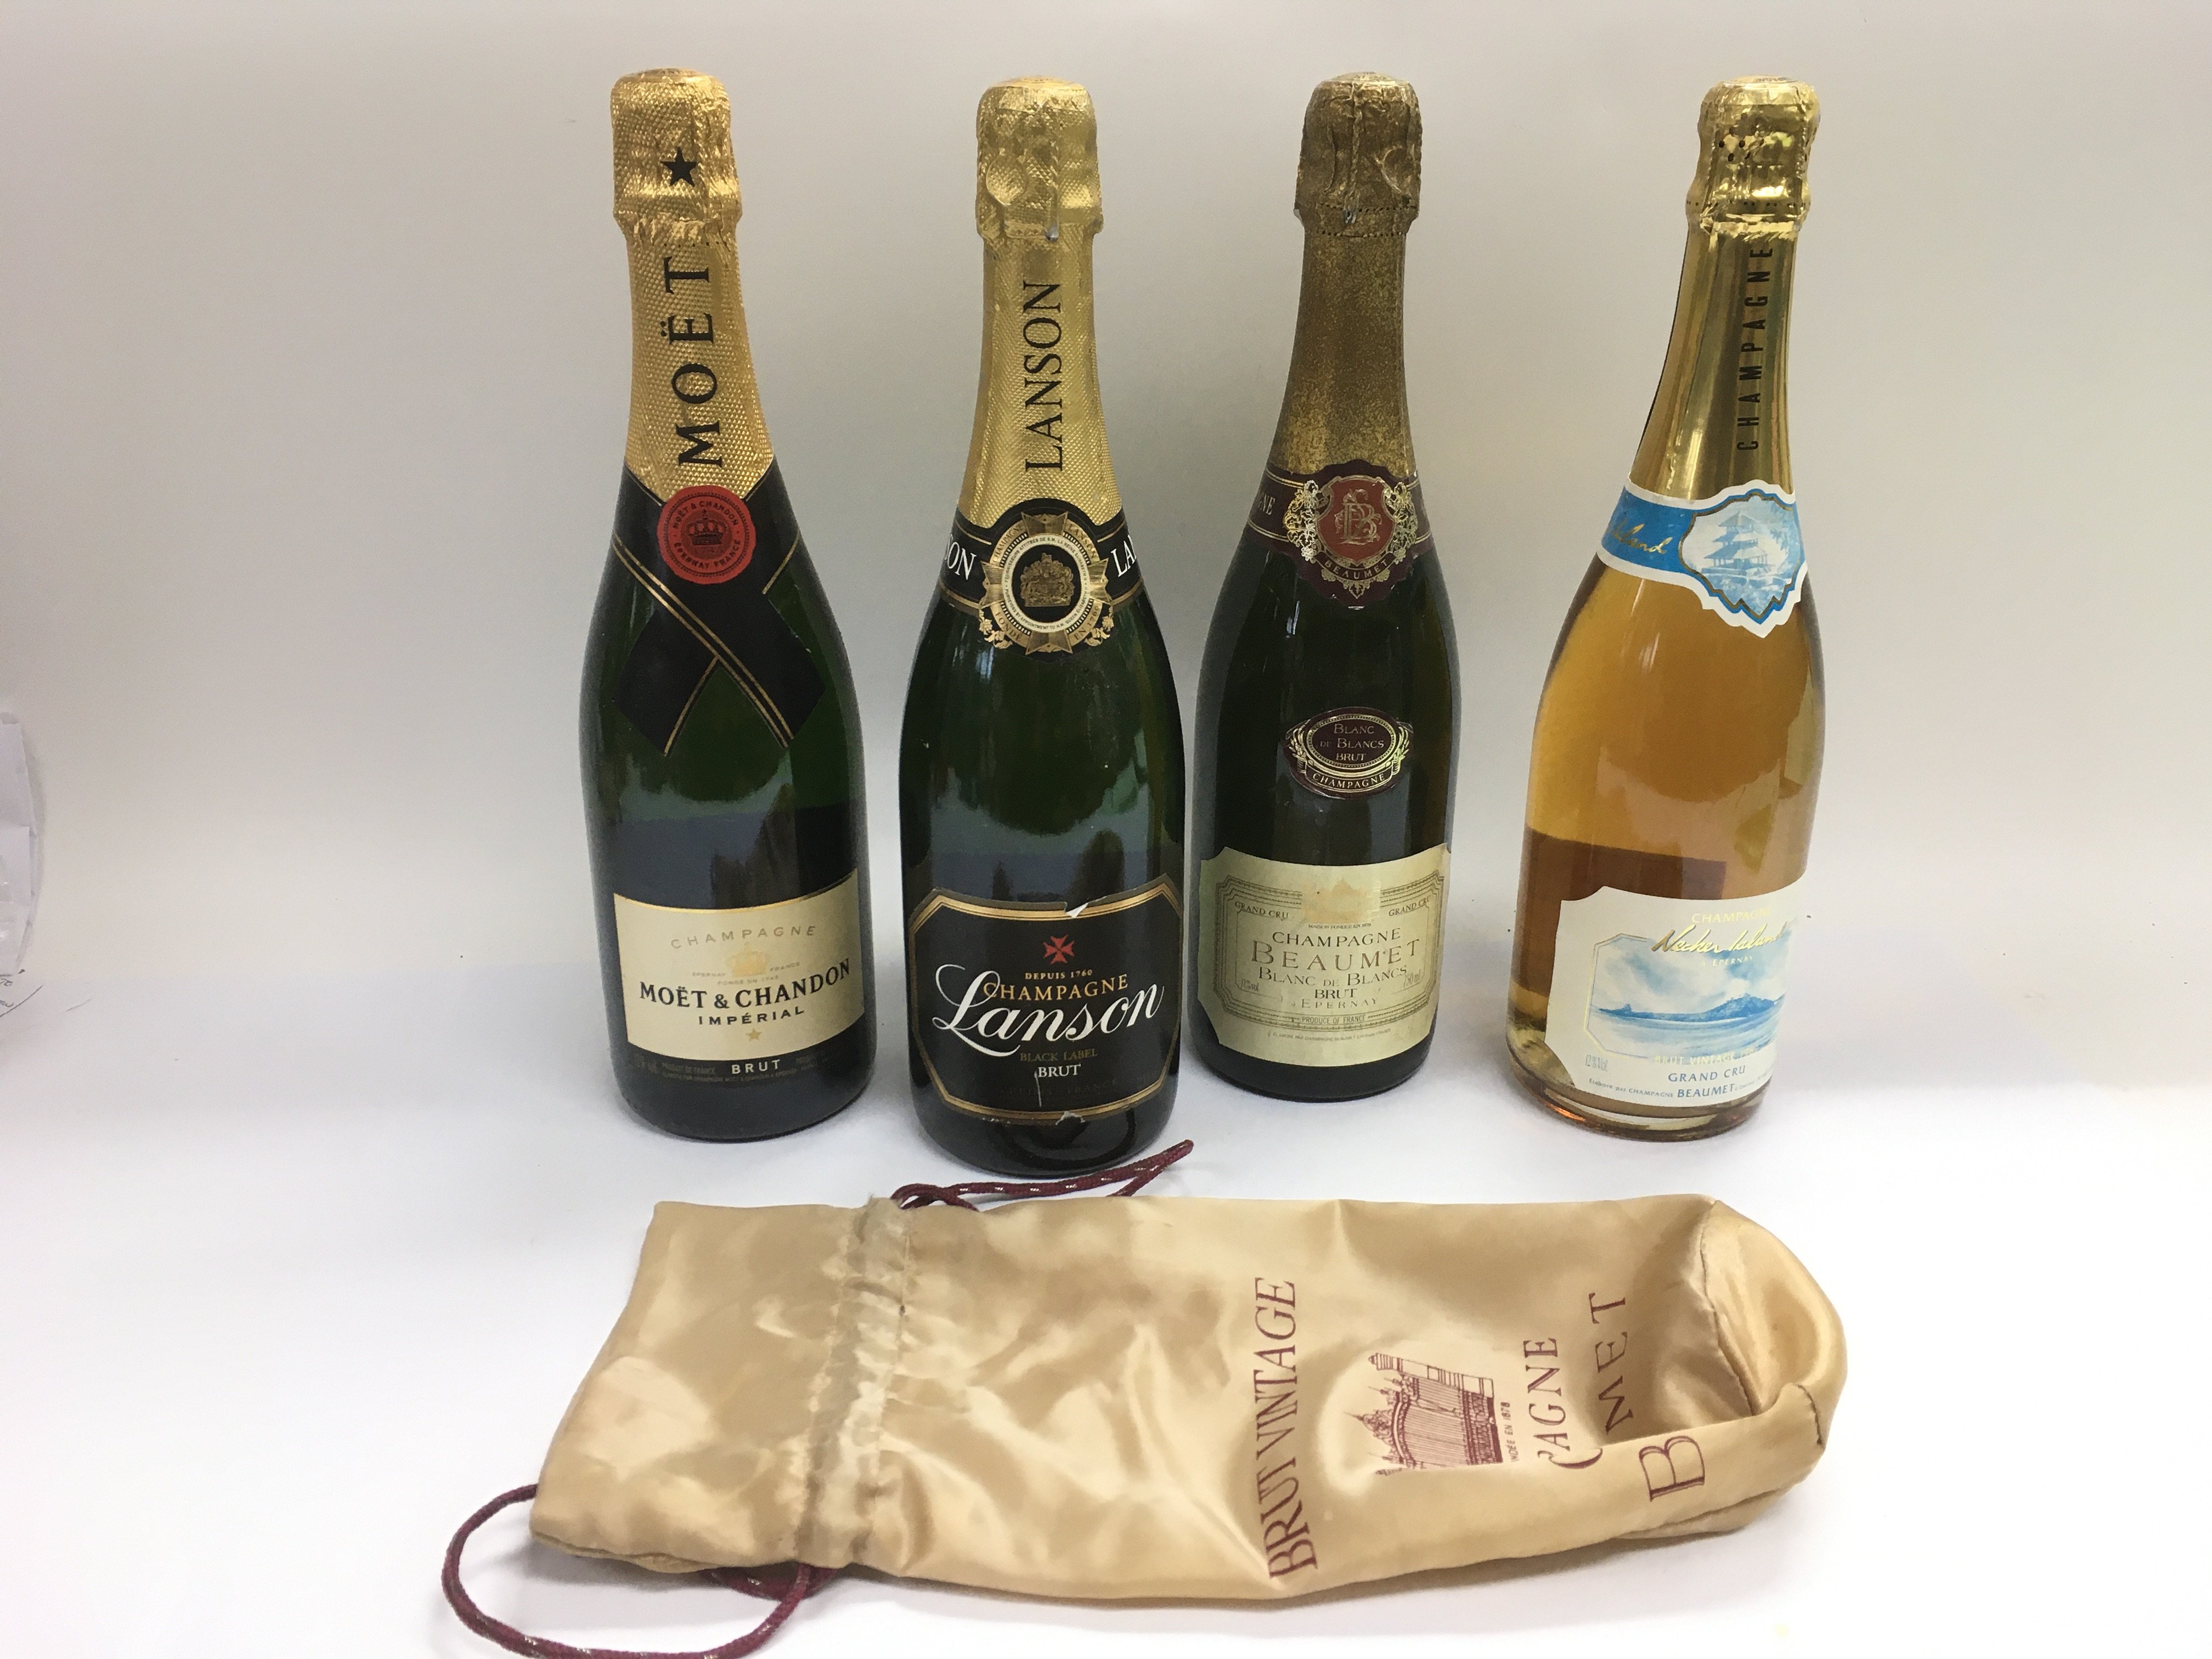 Four bottles of champagne including Moet & Chandon